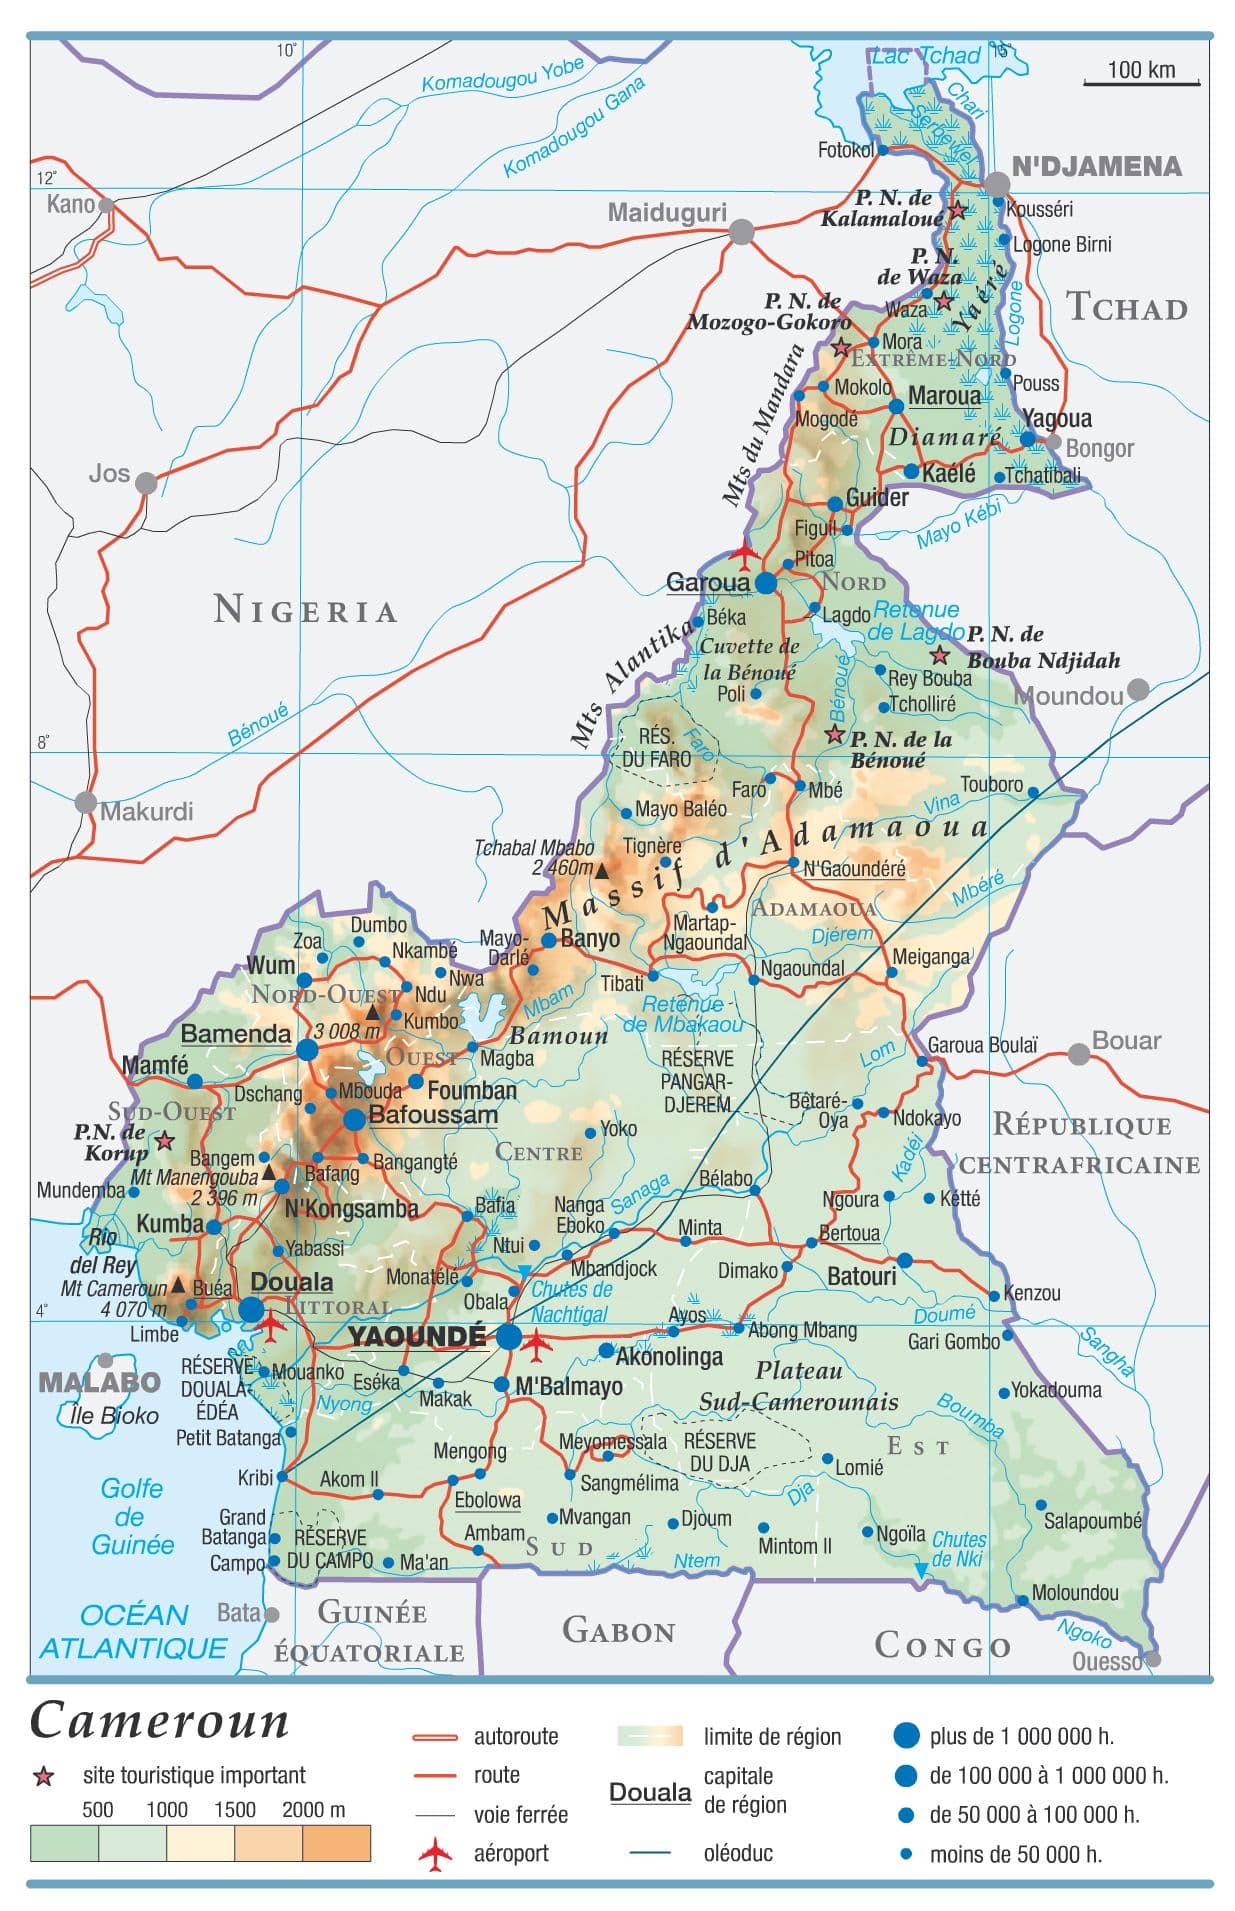 Cameroun – Média LAROUSSE